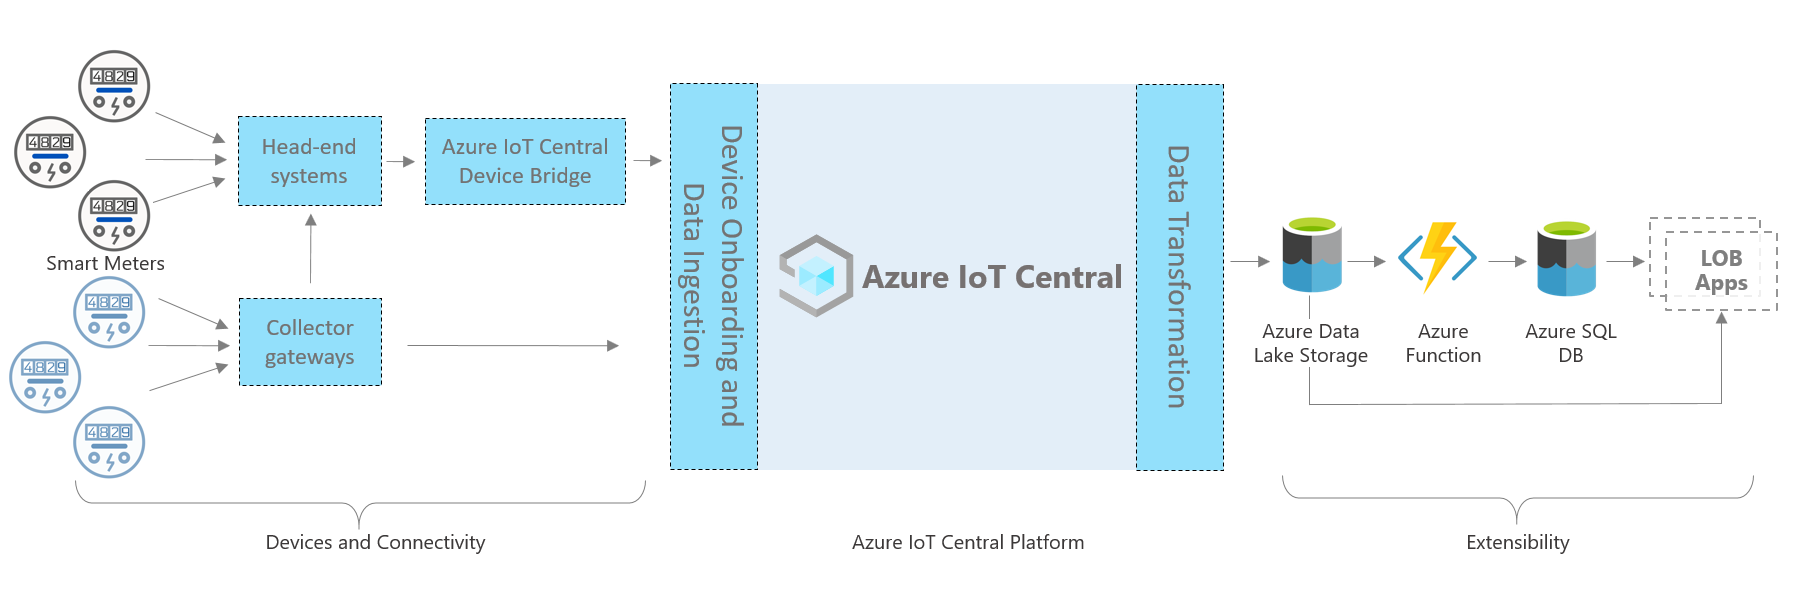 Tutorial - Azure IoT smart-meter monitoring | Microsoft Learn